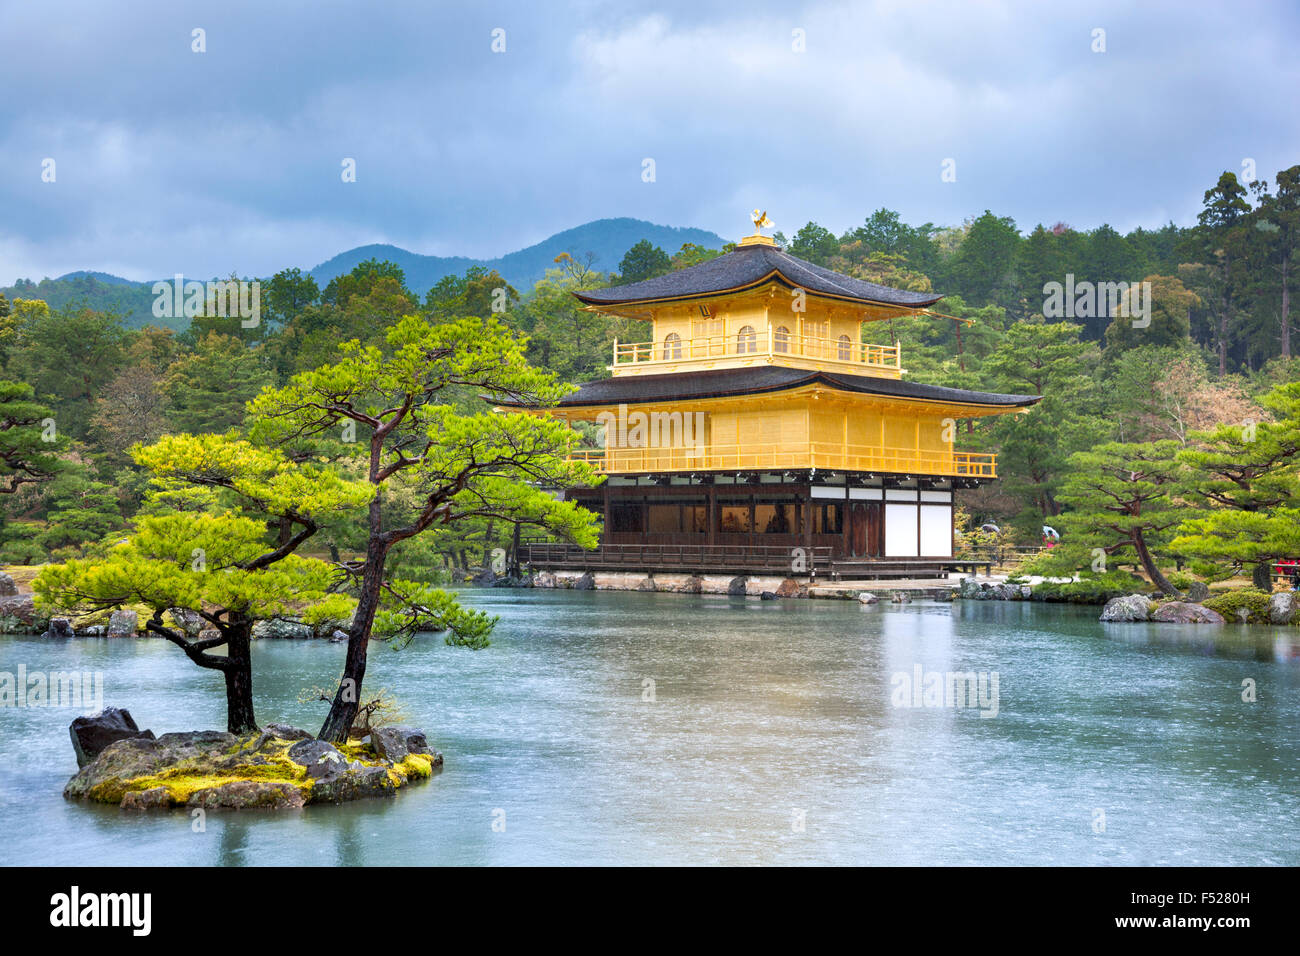 Kinkaku-ji - The Golden Pavilion, Kyoto, Japan Stock Photo